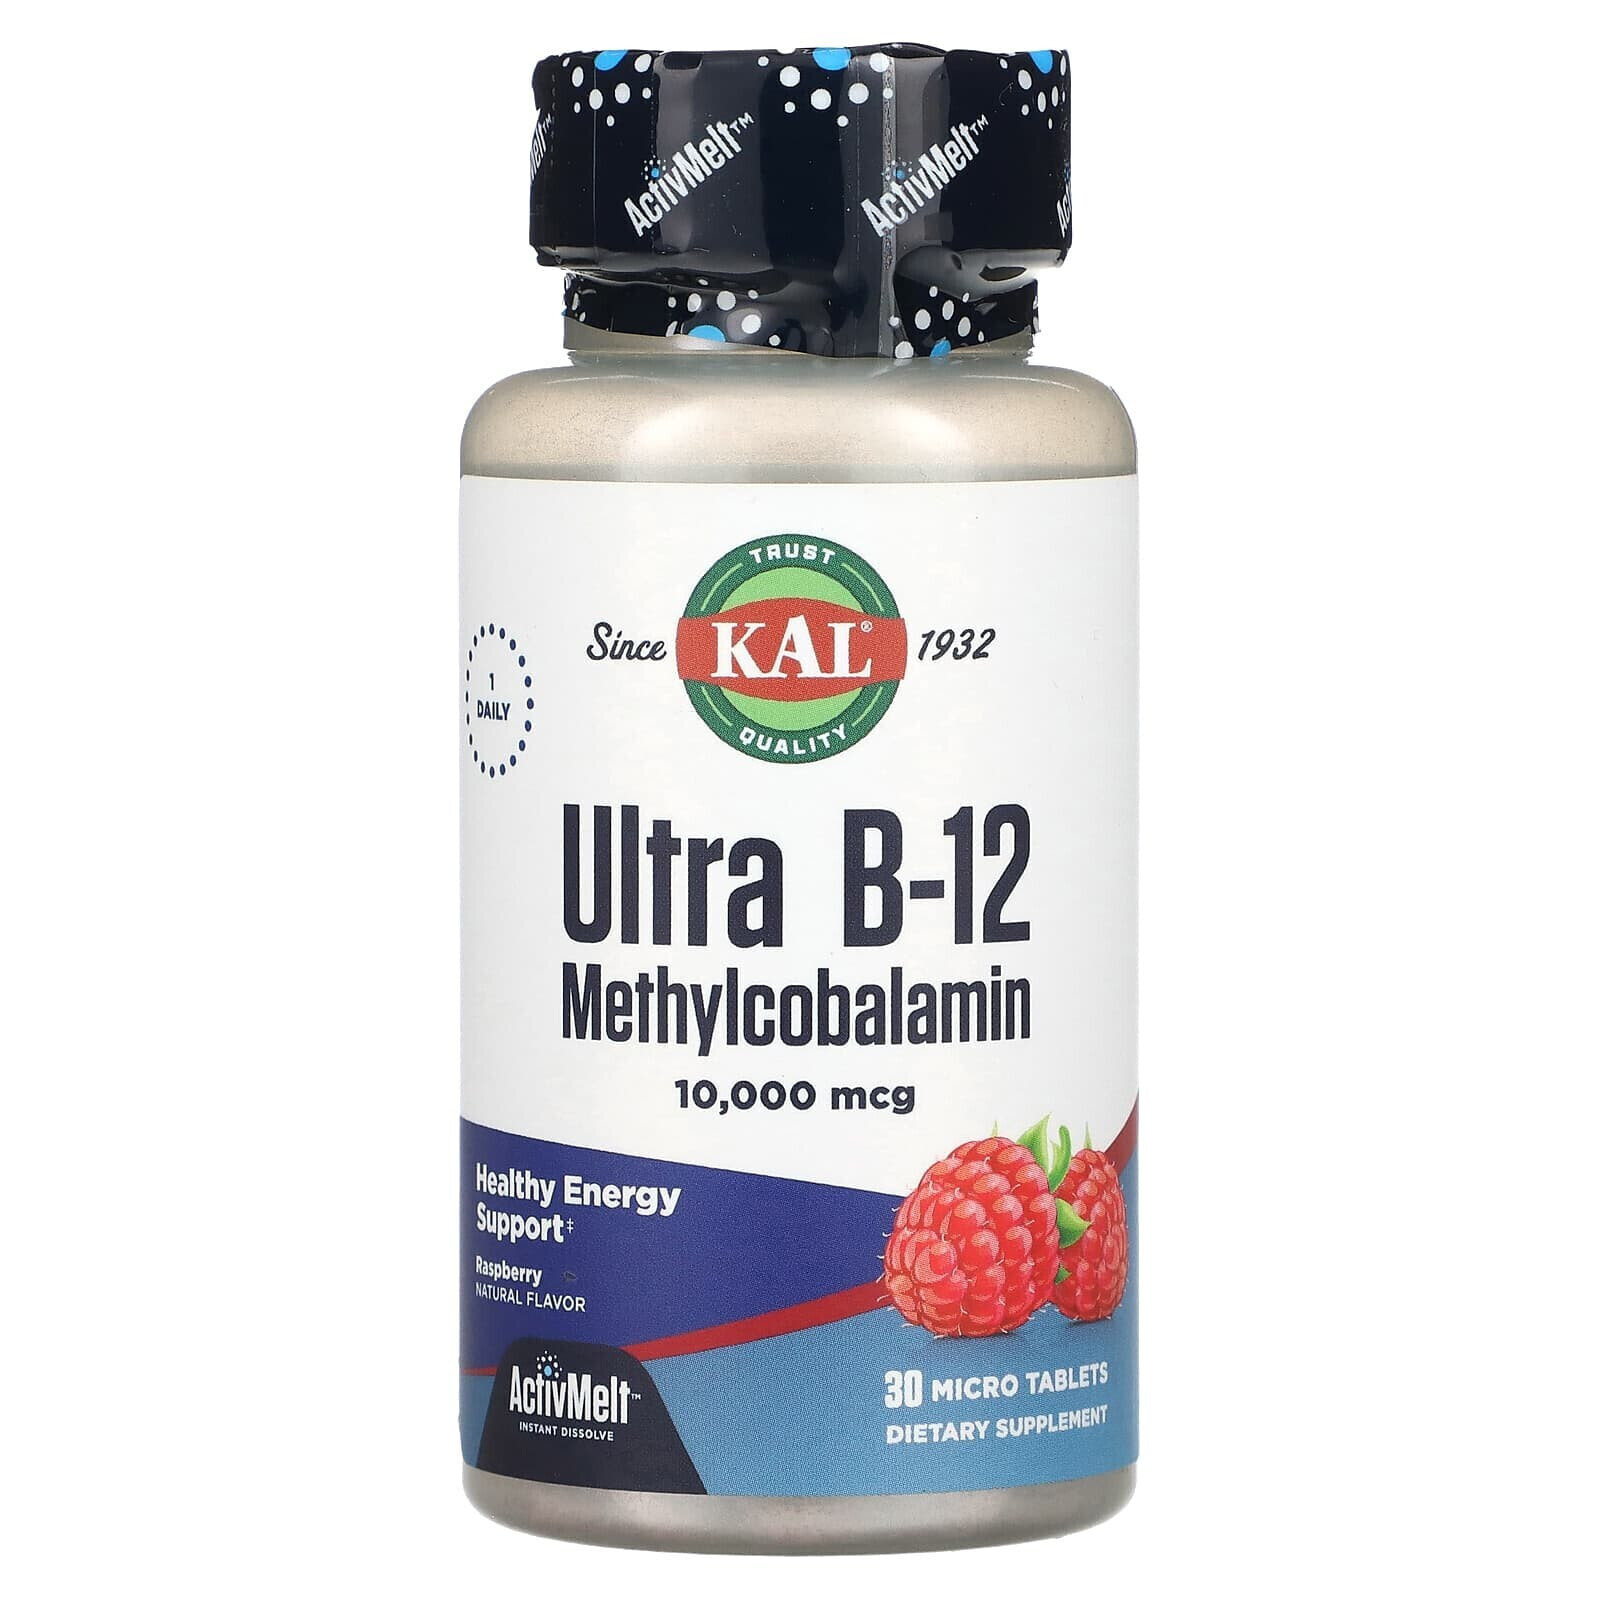 Ultra B-12 Methylcobalamin, Raspberry, 10,000 mcg, 30 Micro Tablets